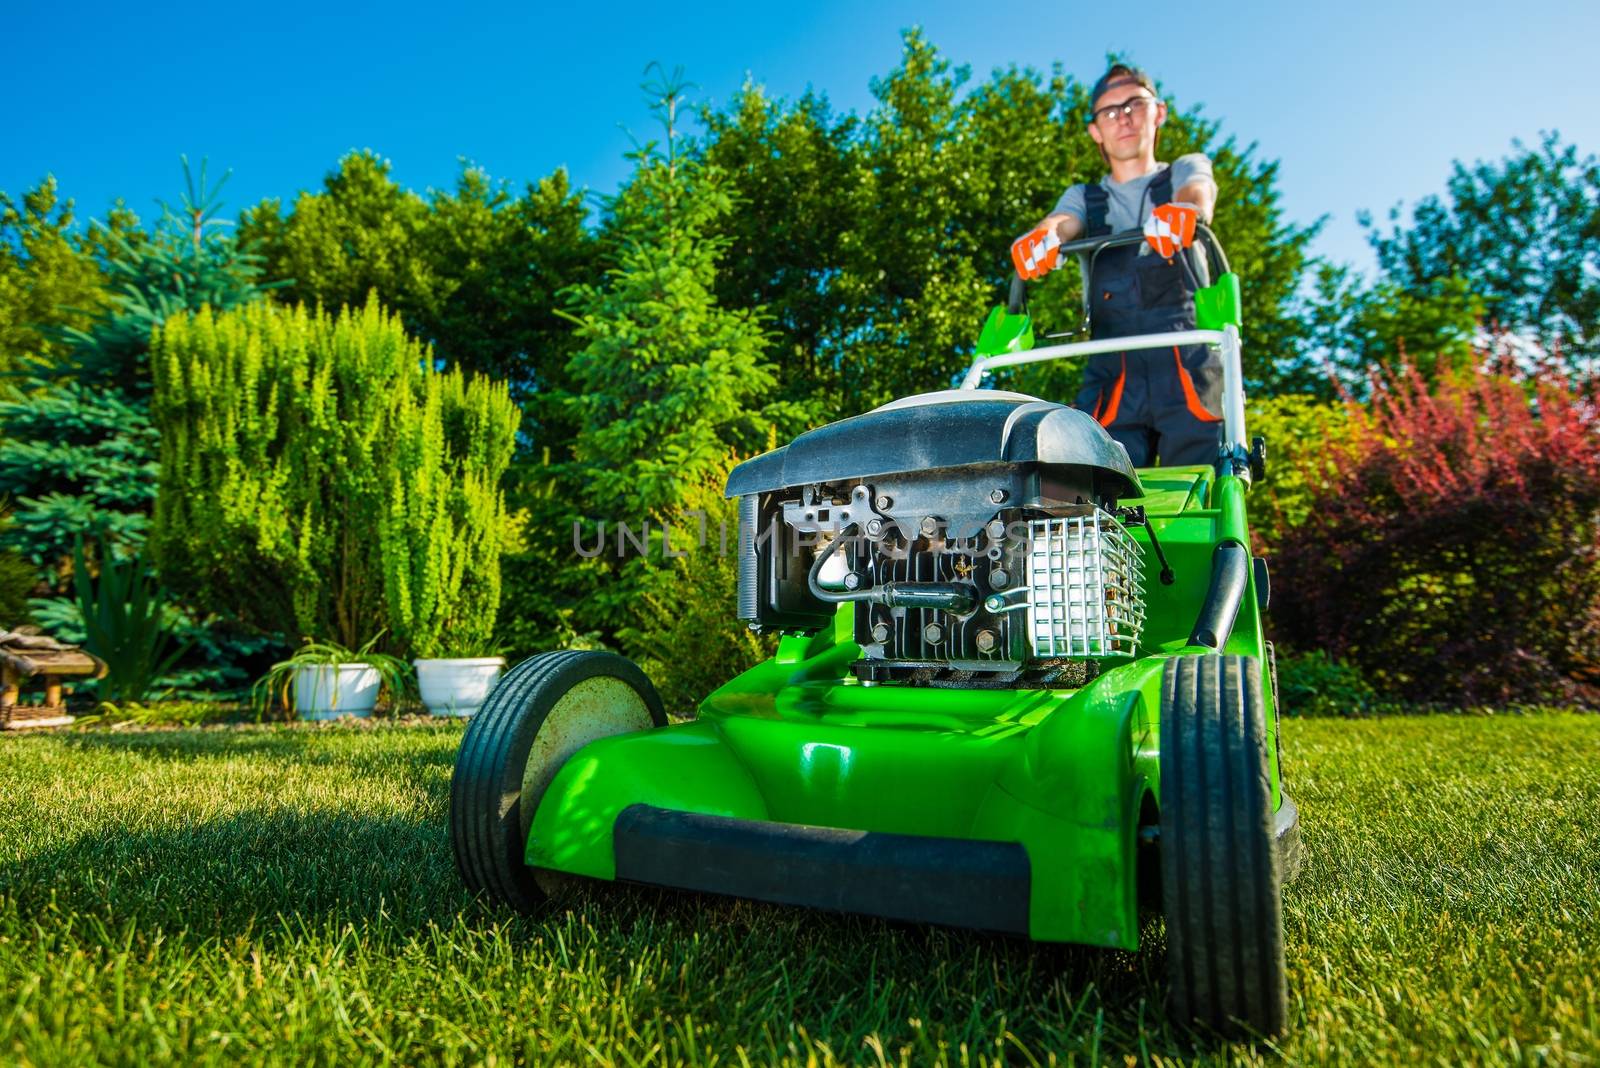 Landscaping Business. Gardener Mowing Backyard Lawn. Green Gasoline Lawn Mower